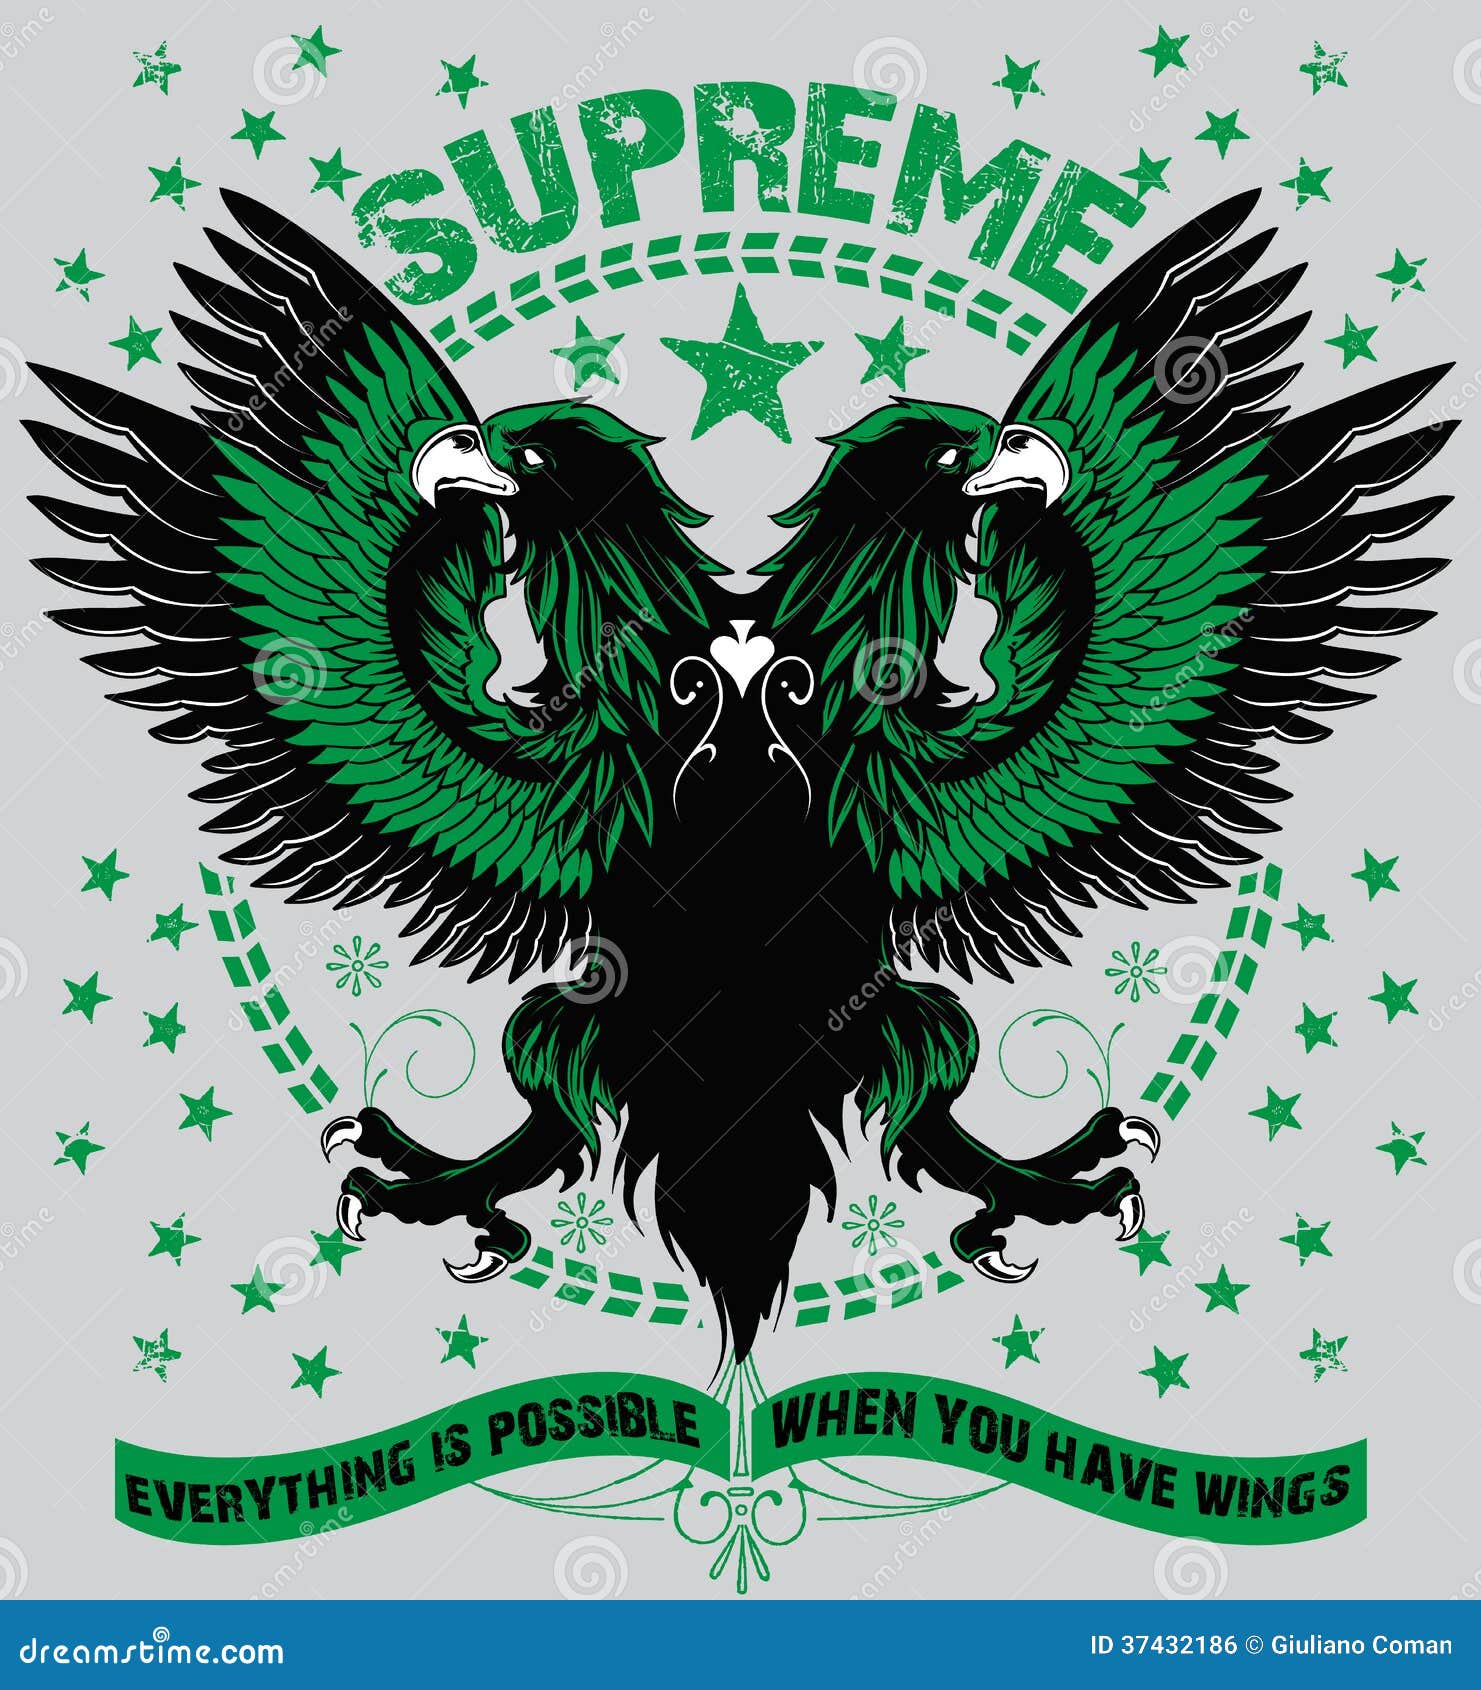 Download Symbol of the Supreme Brand Wallpaper